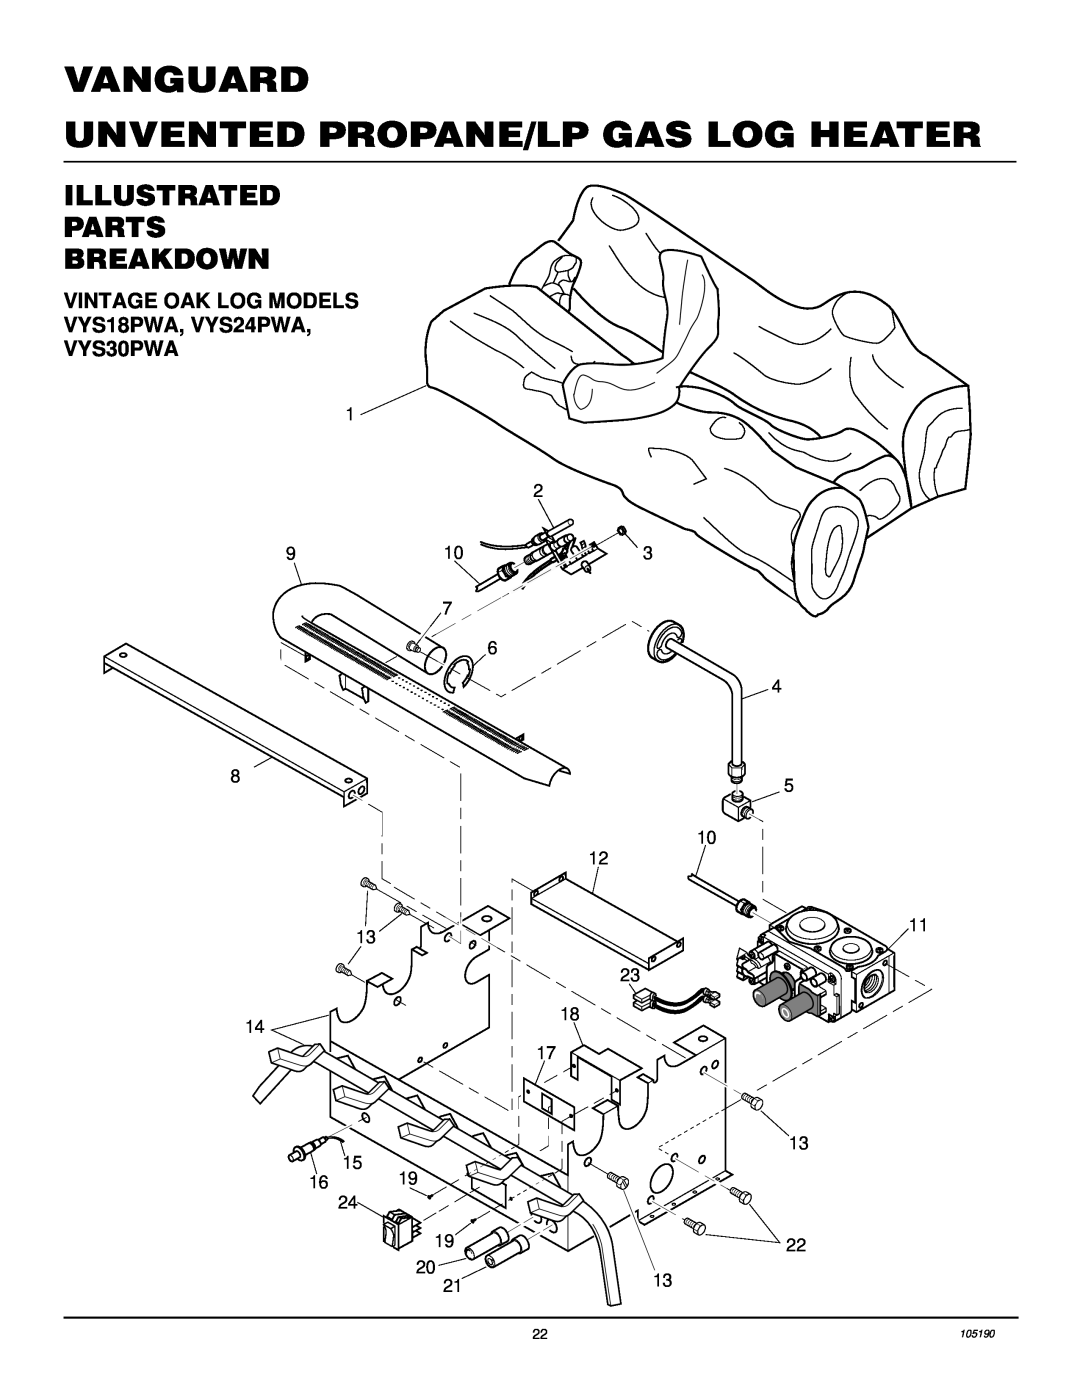 Vanguard Heating VYS30PWA installation manual Illustrated Parts Breakdown, VINTAGE OAK LOG MODELS VYS18PWA, VYS24PWA 